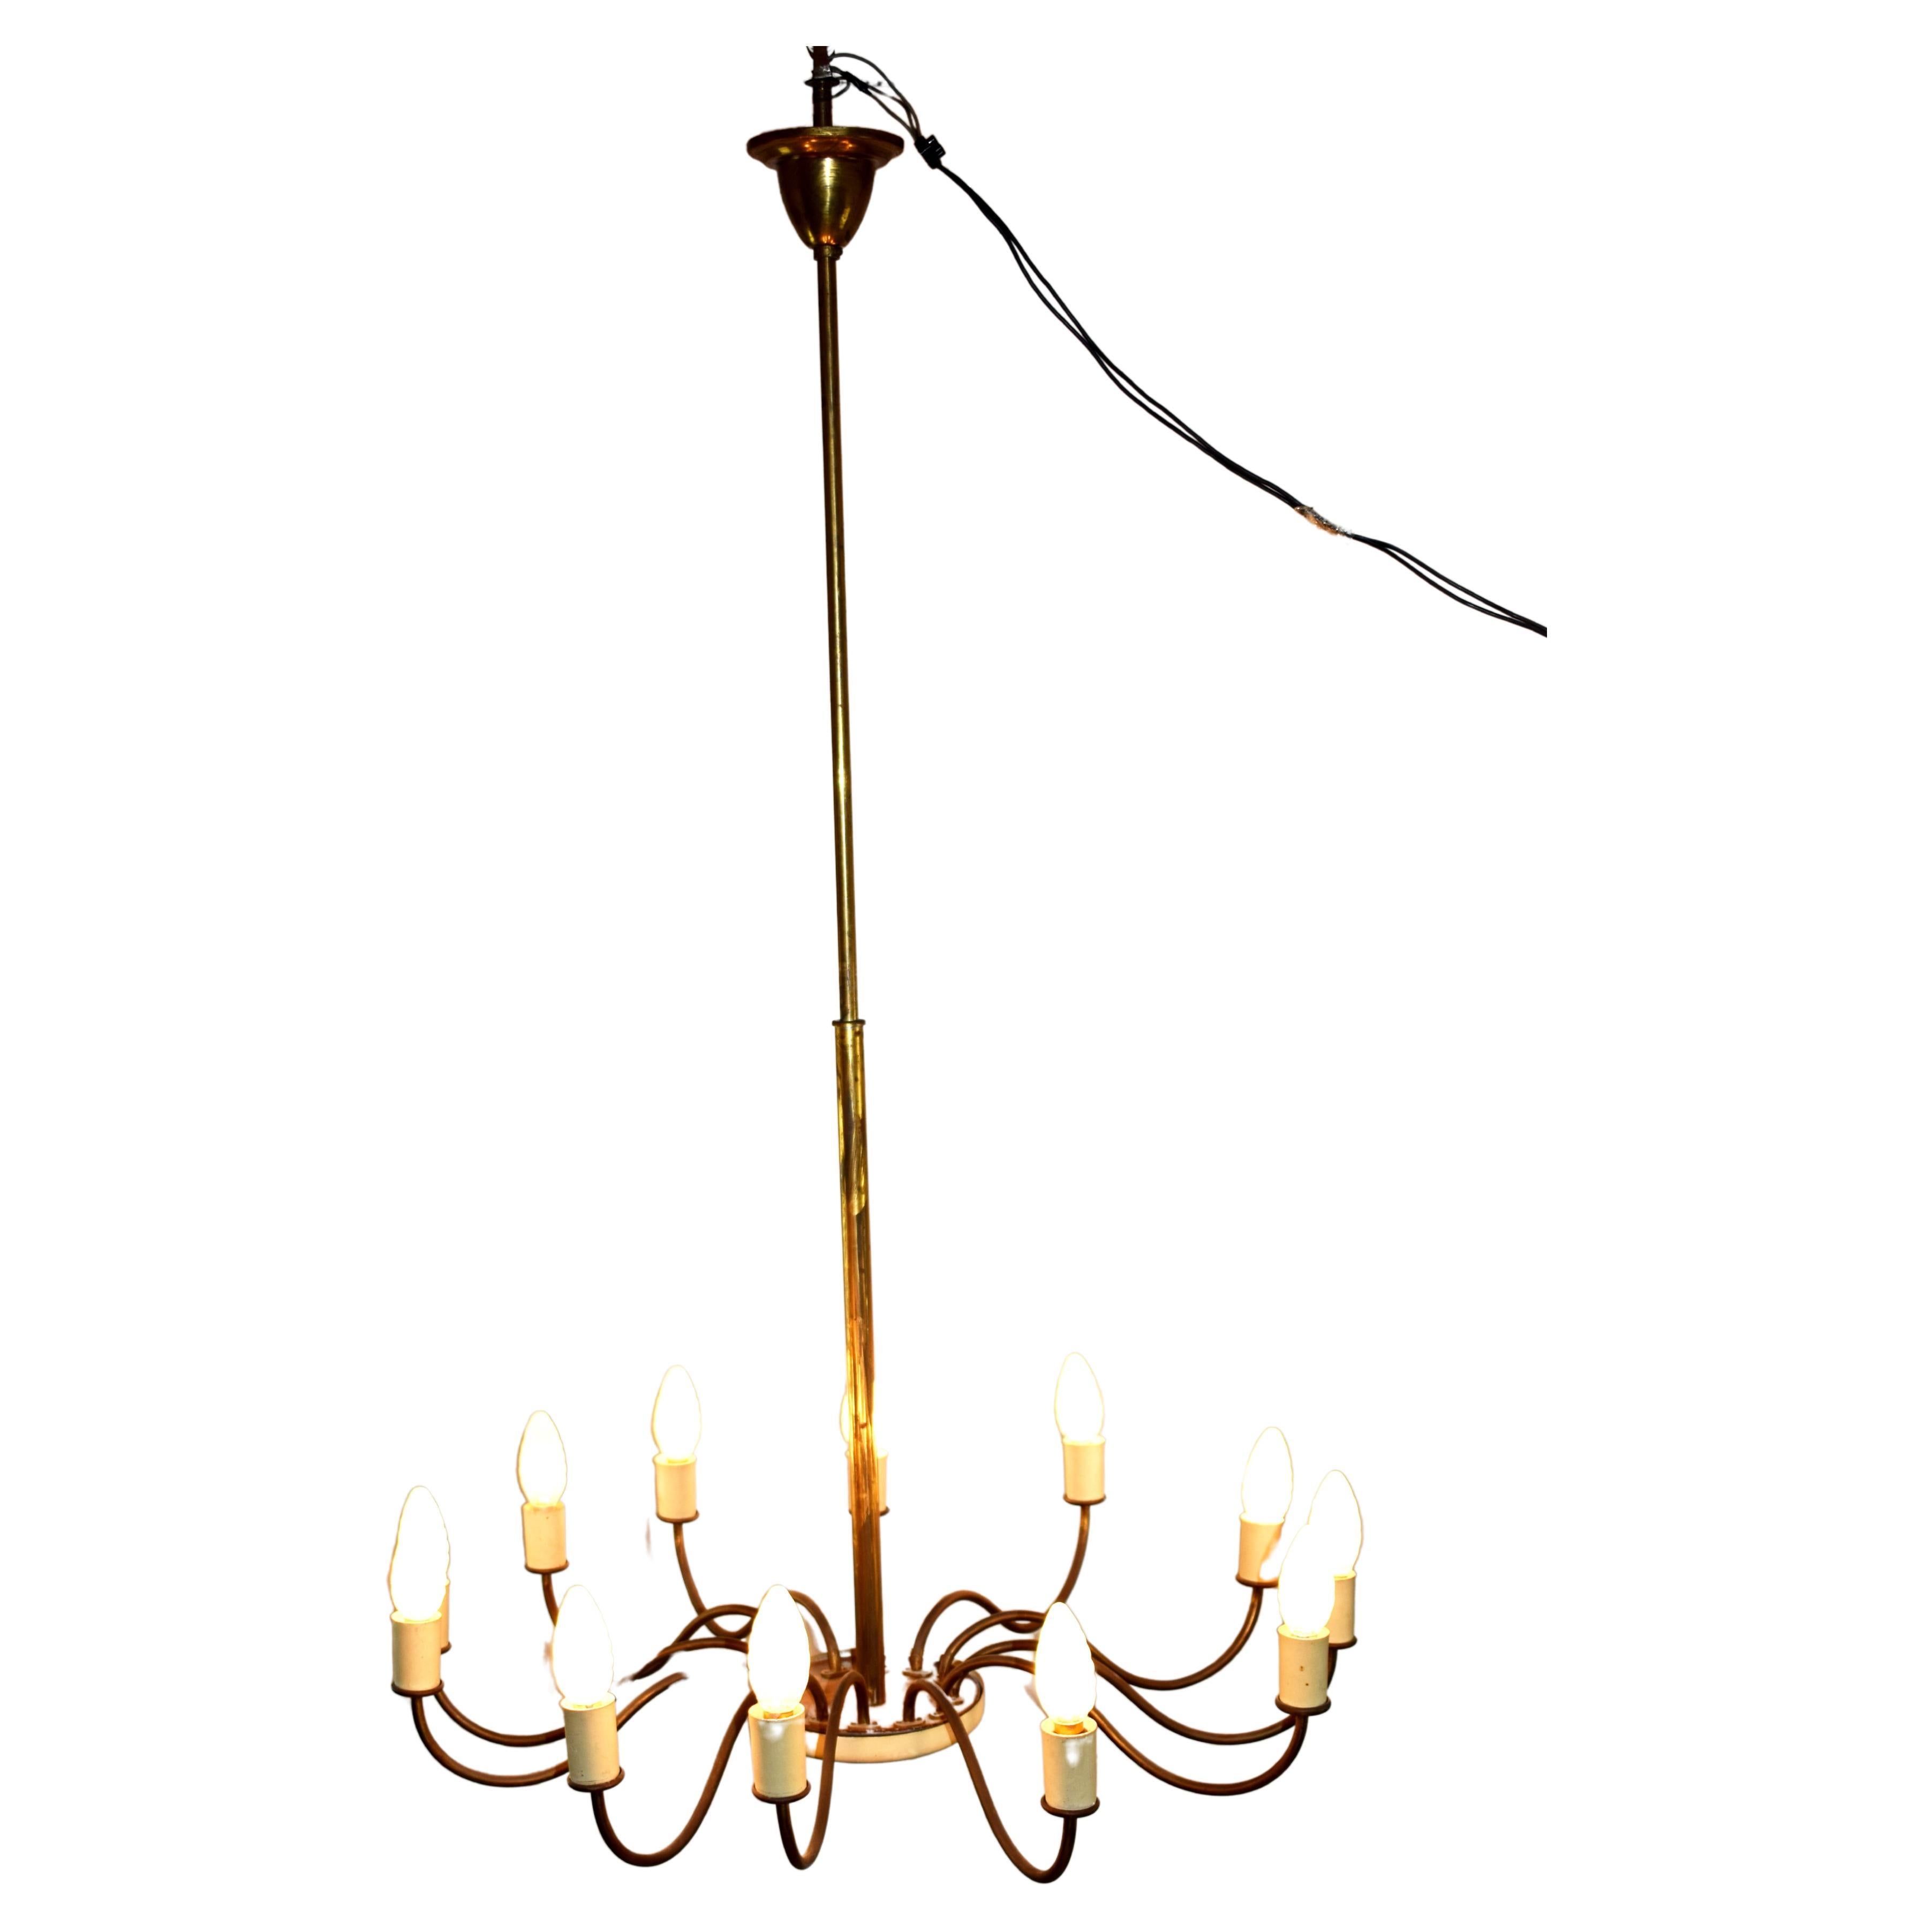 Italian brass chandelier, 1950s.
Dimensions: H= 115 cm; D= 68 cm.